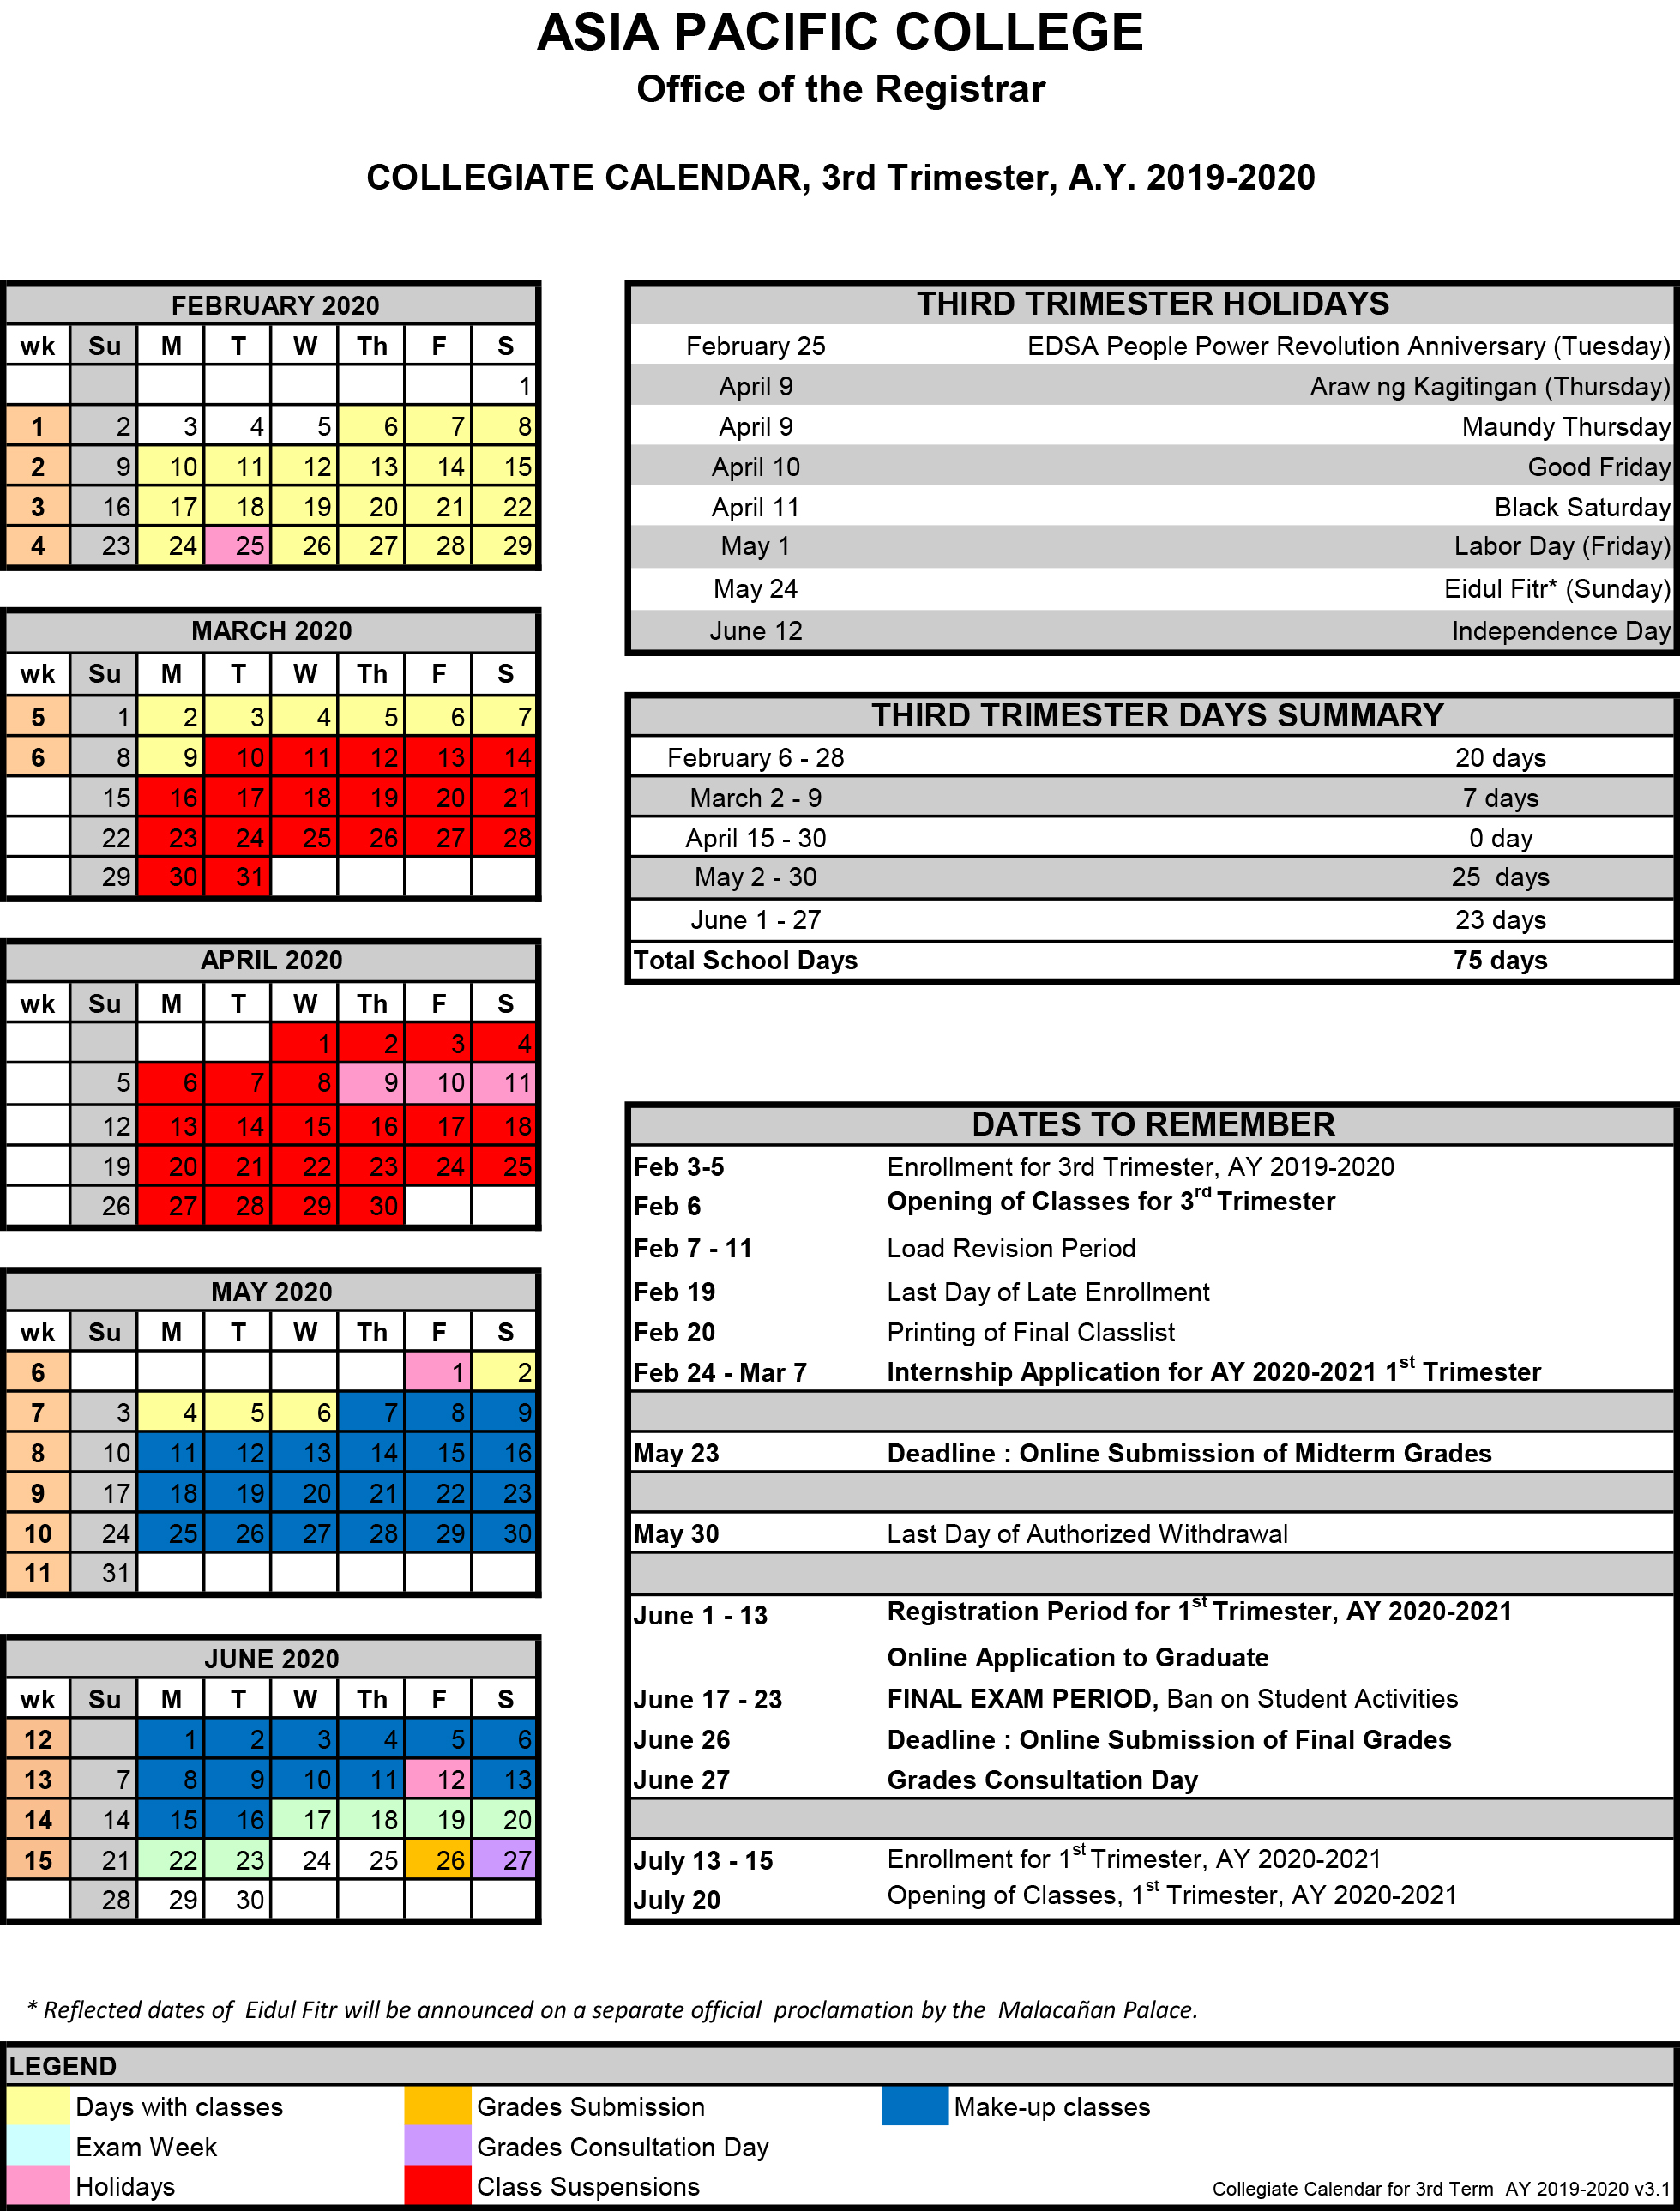 Term 3 Collegiate Calendar_as of 04-20-2020